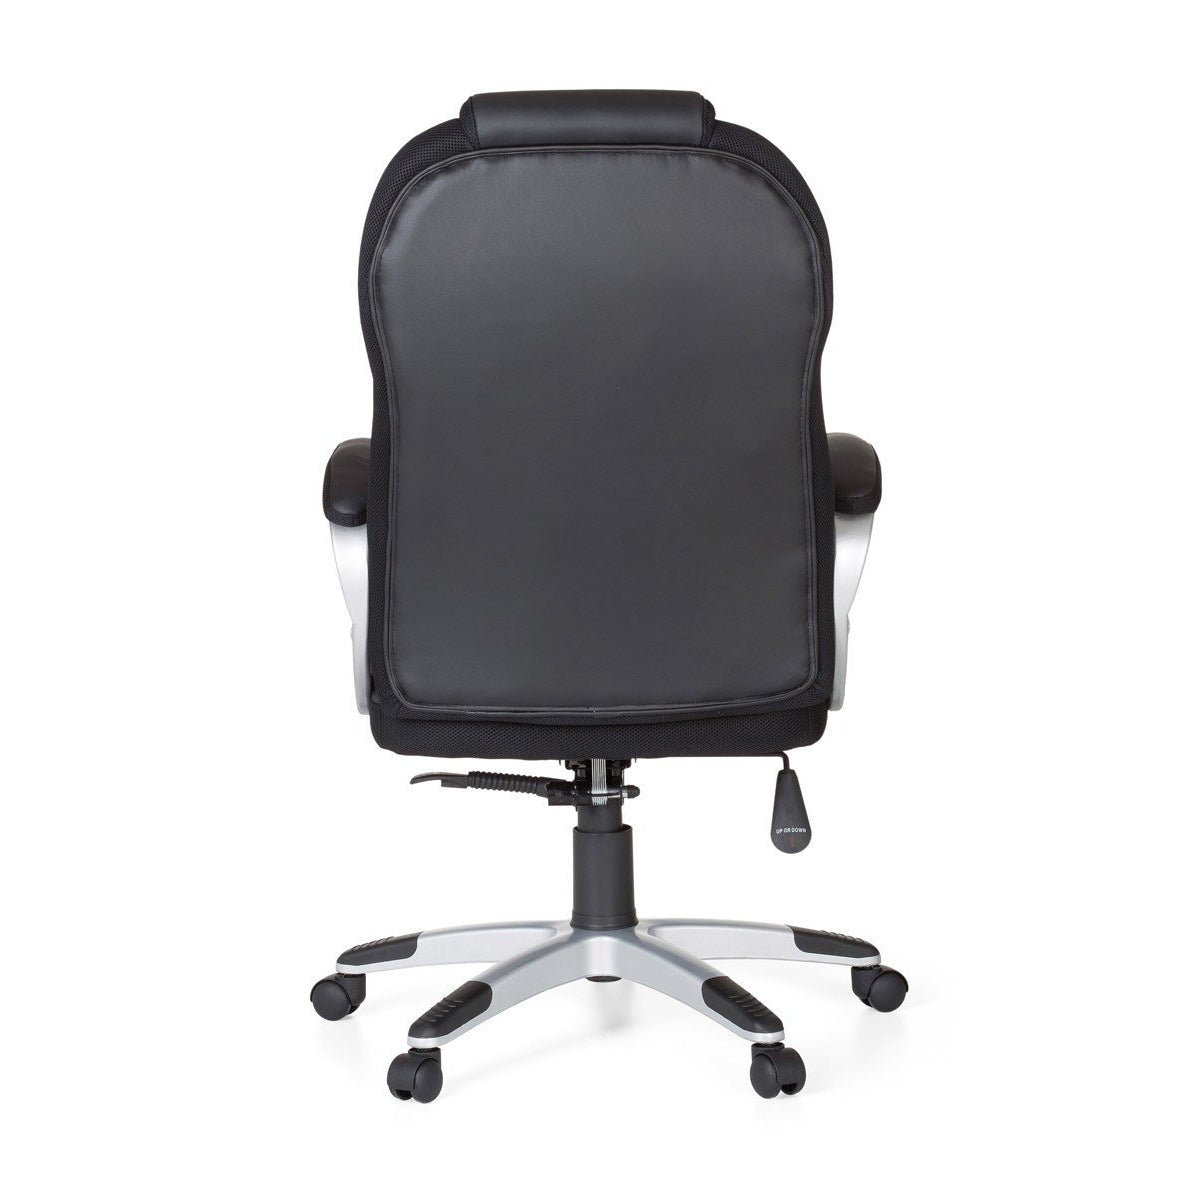 Nancy's Caton Office chair - Executive chair - Swivel chair - Ergonomic office chair - Adjustable - Black